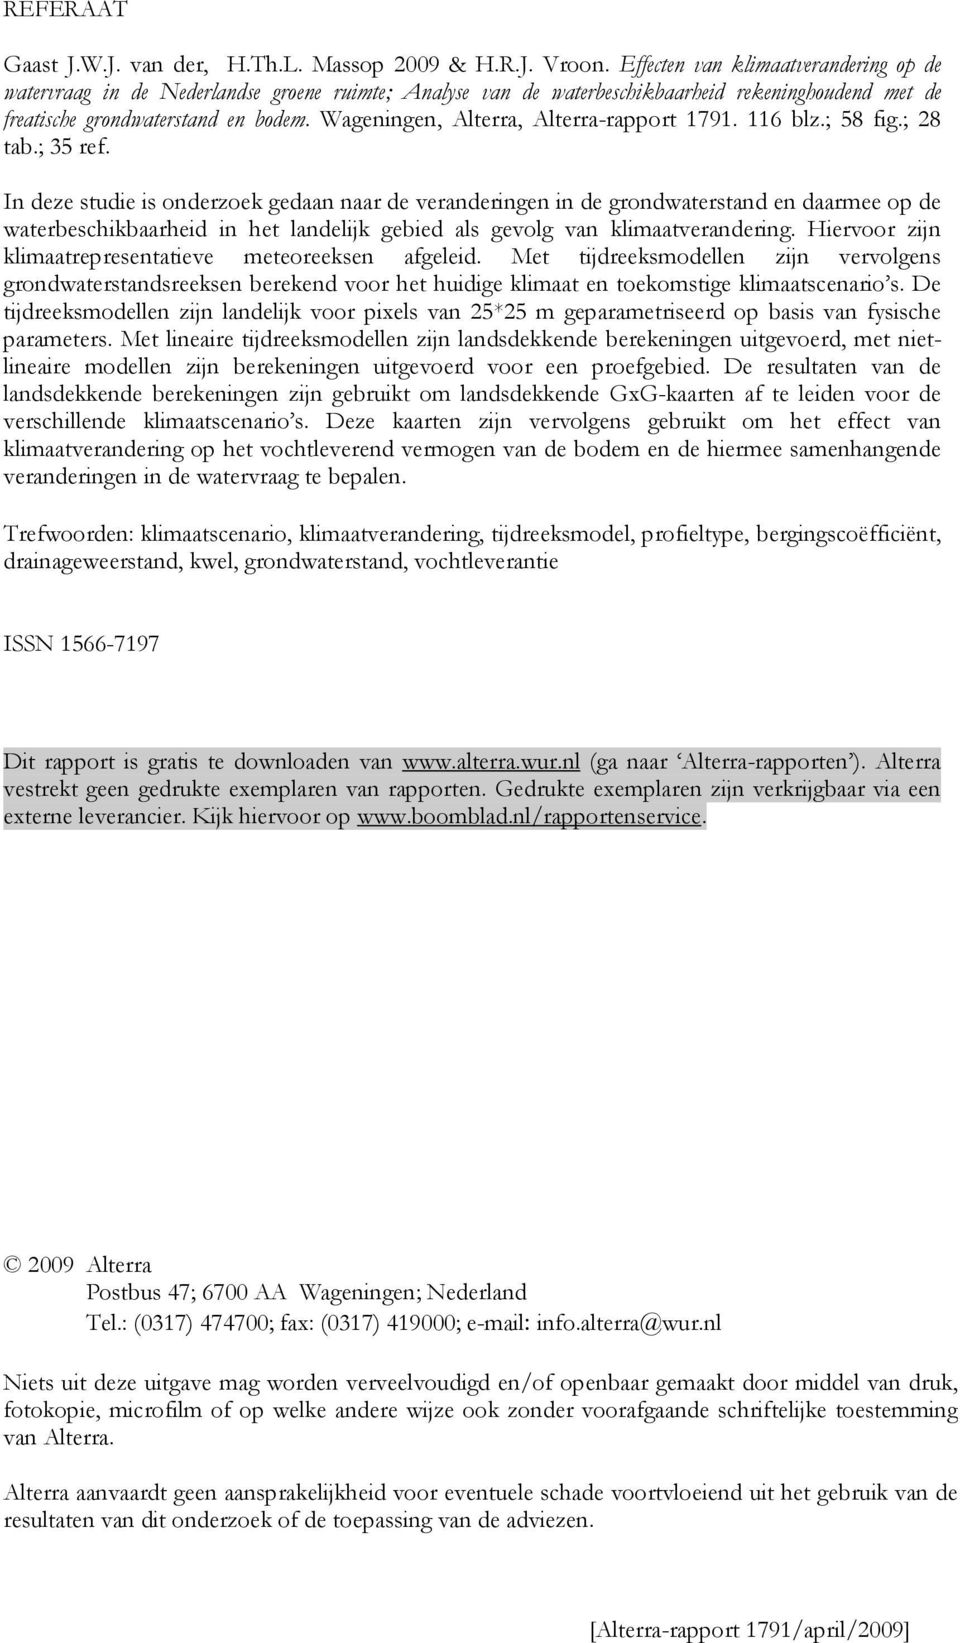 Wageningen, Alterra, Alterra-rapport 1791. 116 blz.; 58 fig.; 28 tab.; 35 ref.